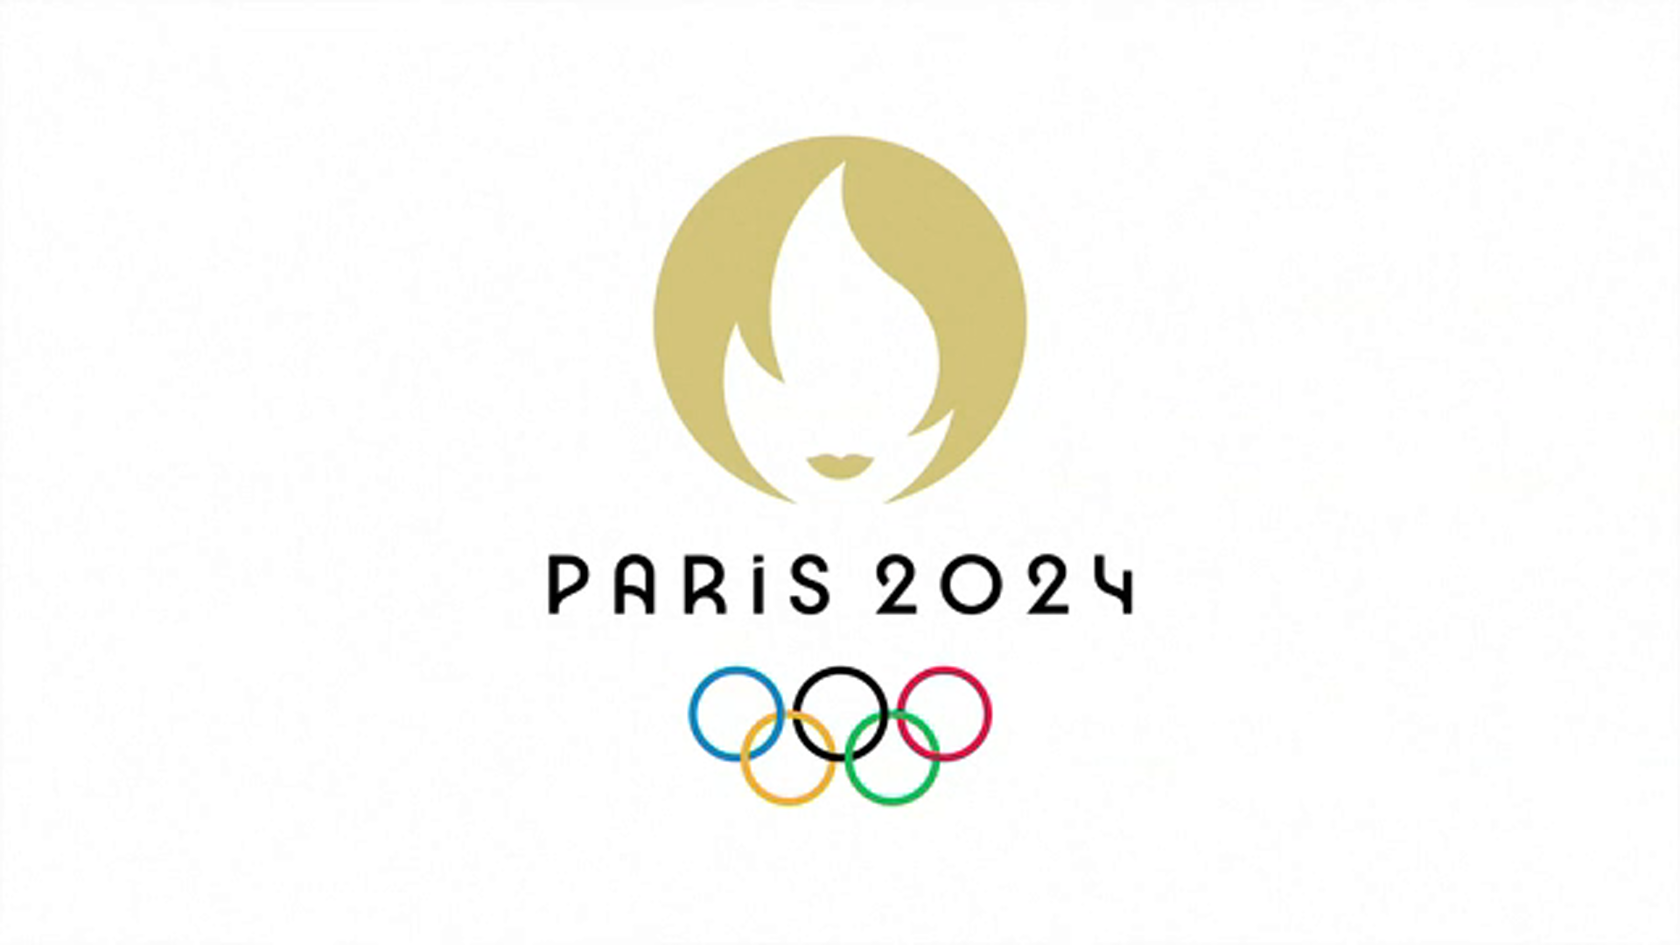 Evalife 2024. Летние Олимпийские игры 2024. Олимпийских игр–2024 в Париже лого. Логотип олимпиады.